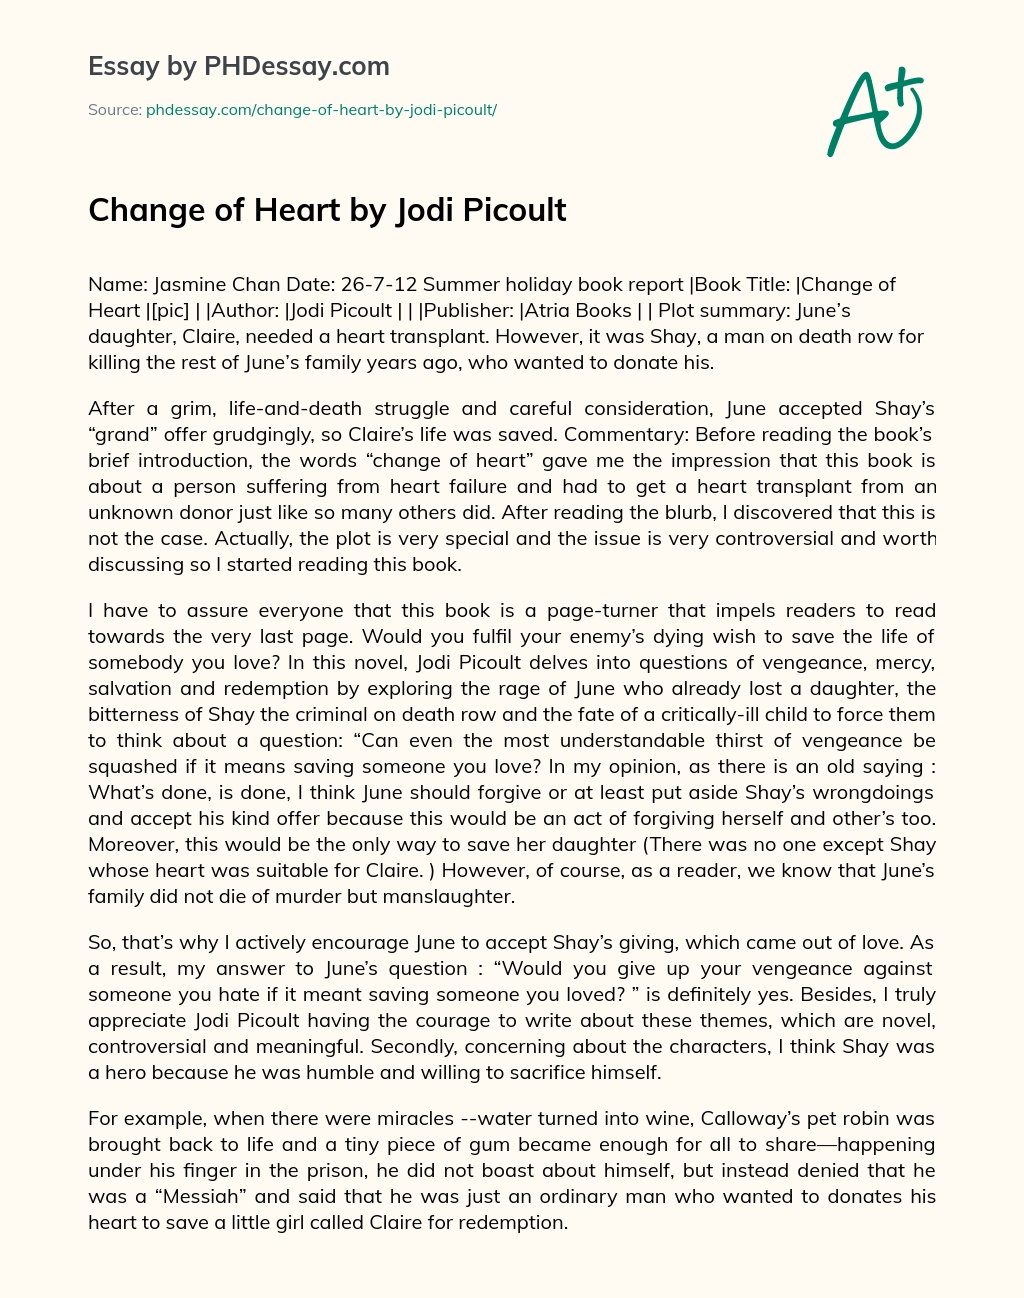 Change of Heart by Jodi Picoult essay